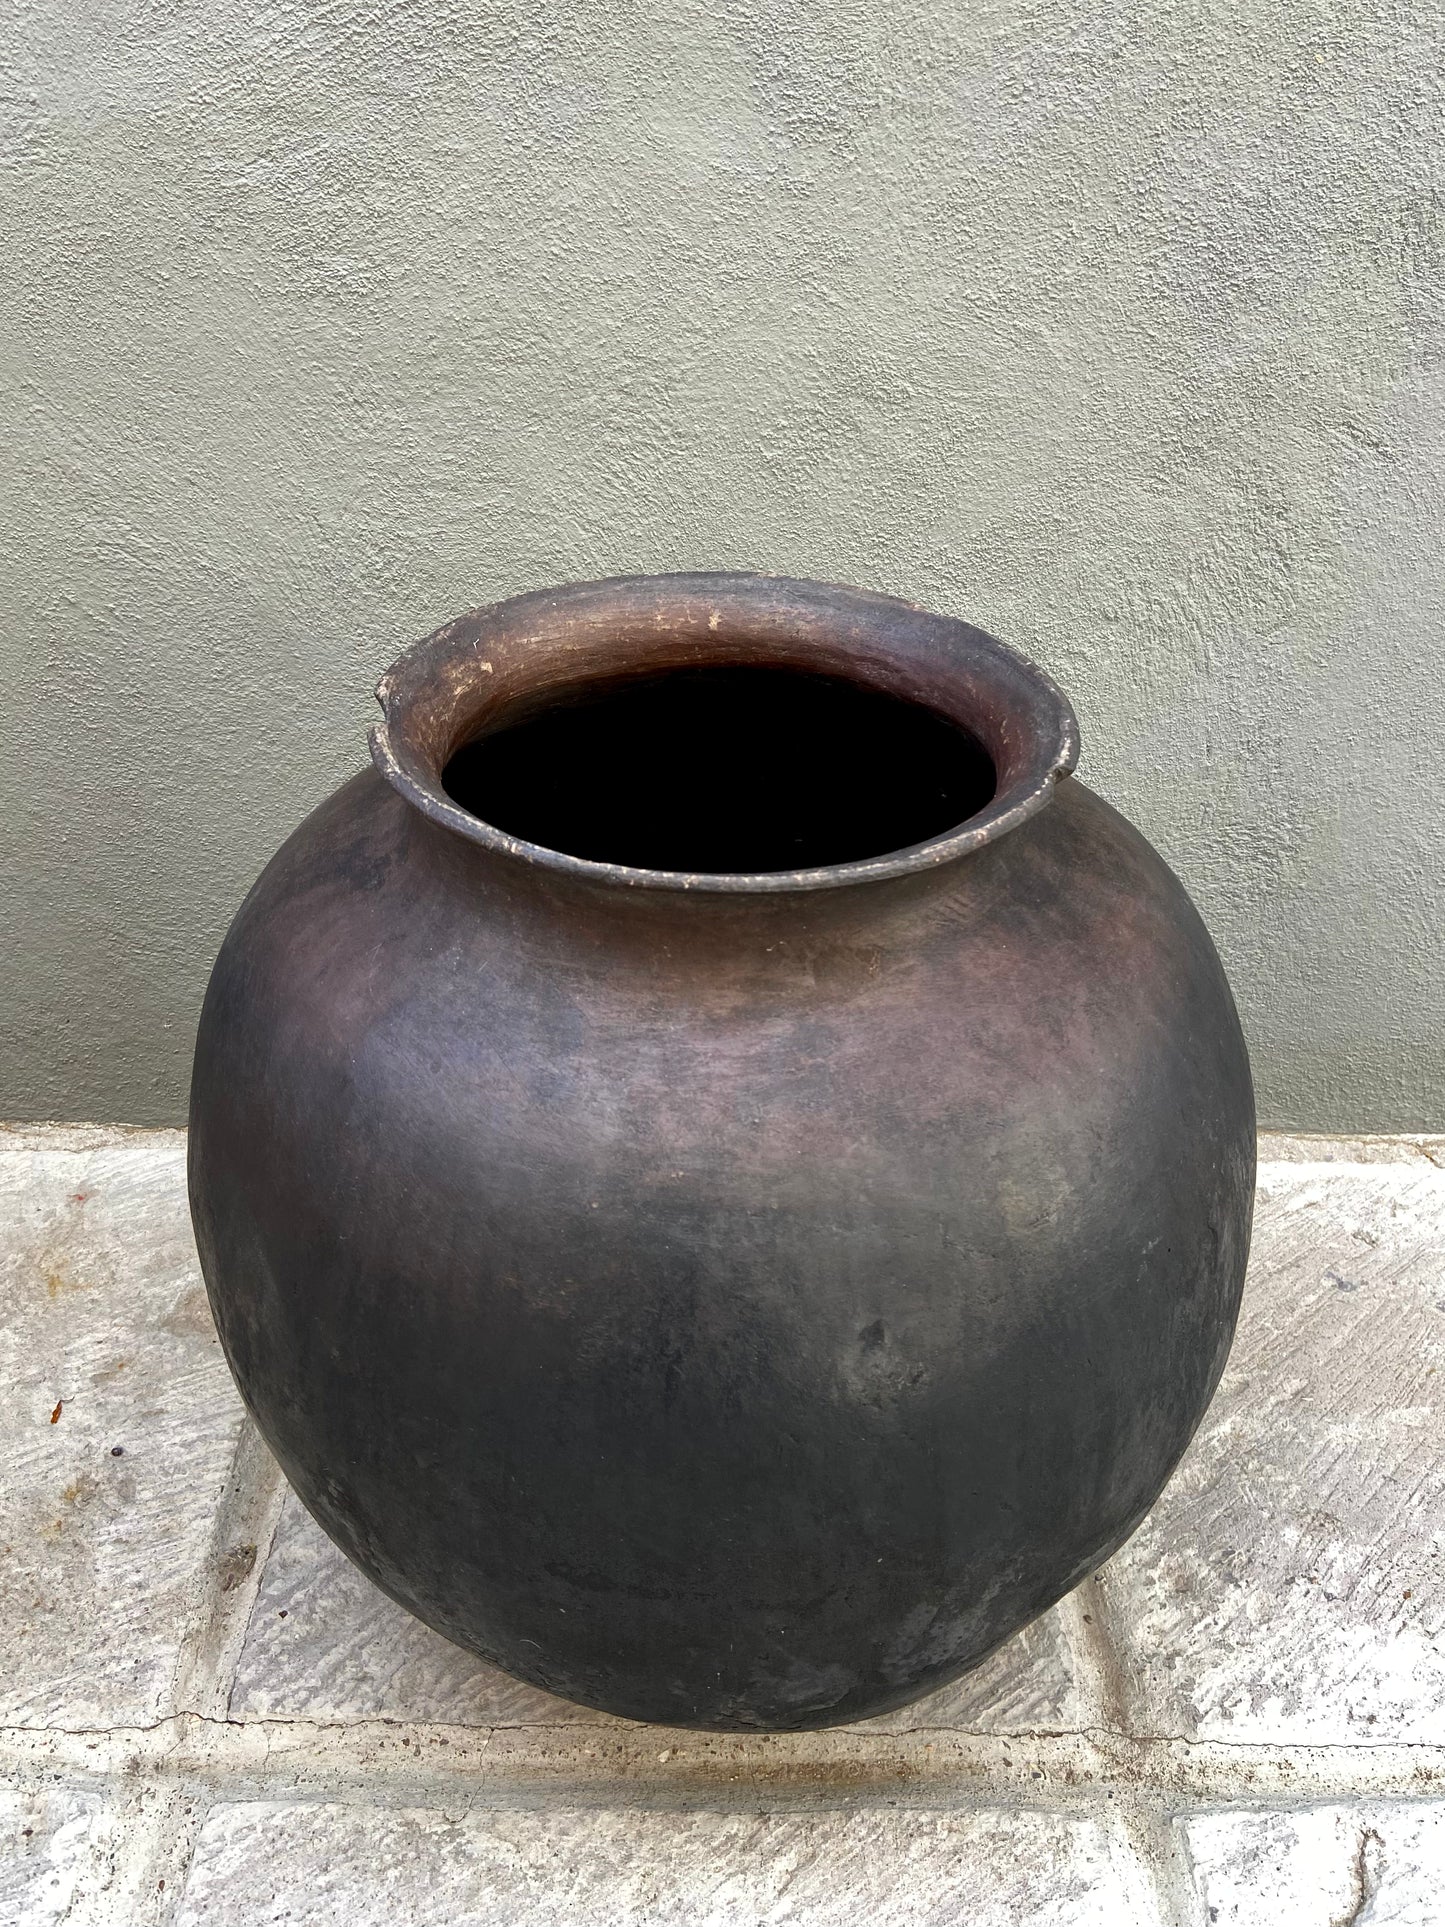 Tinaja Michoacan / Michoacan Pot